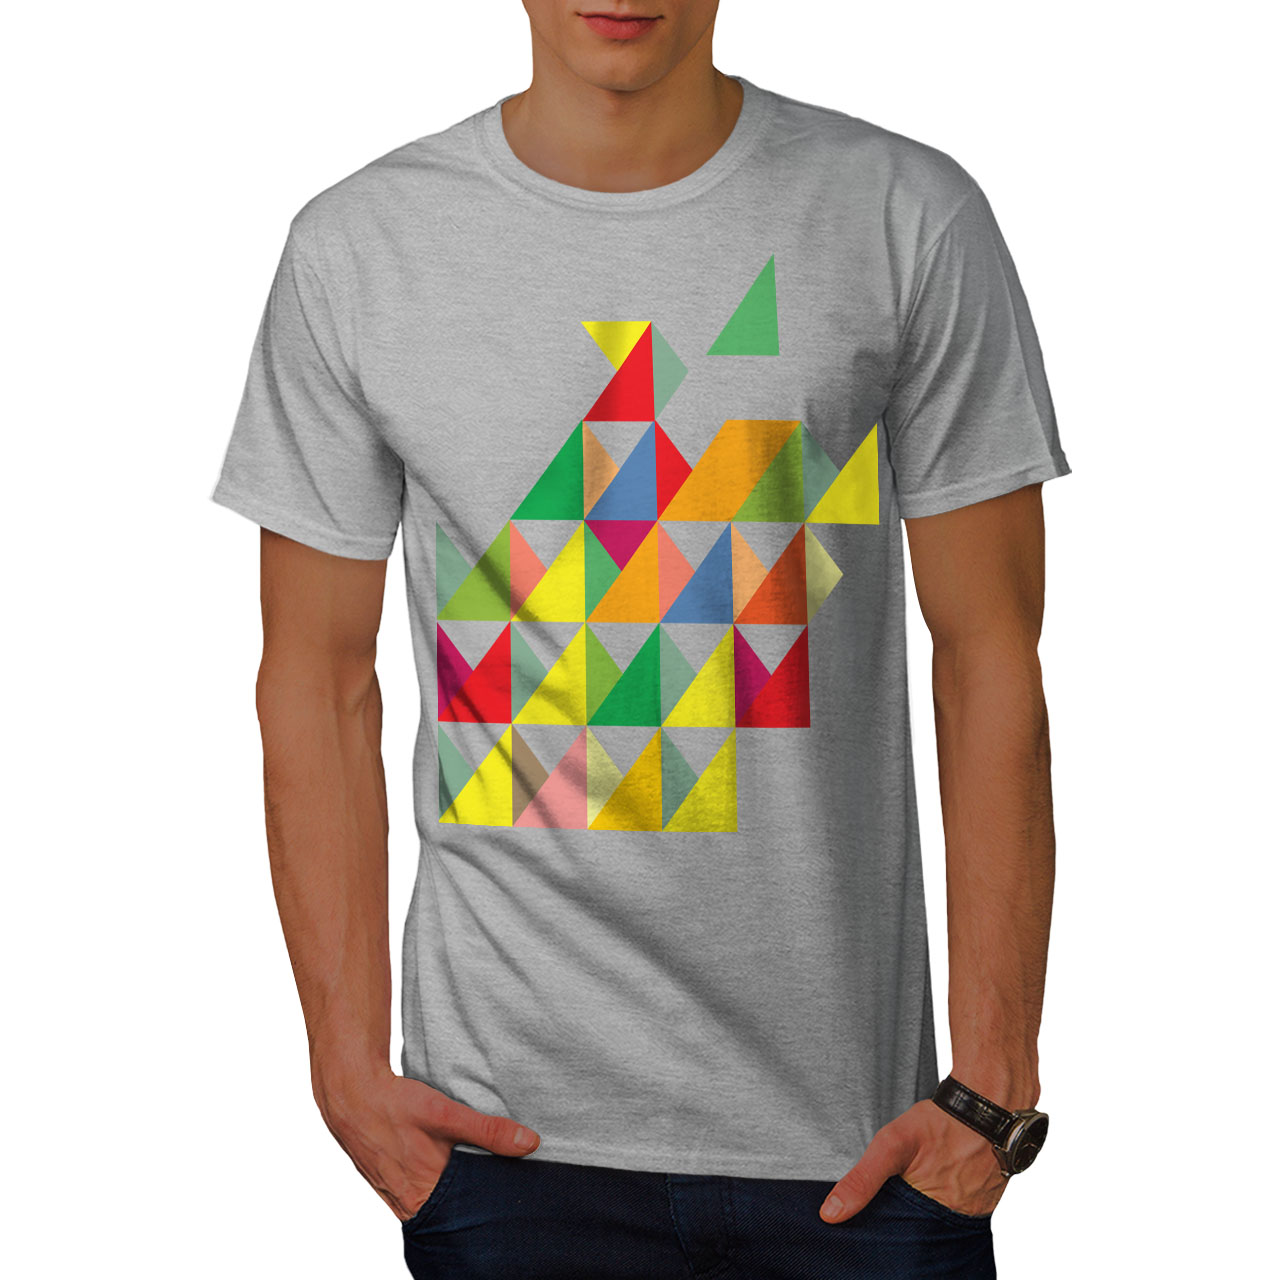 Wellcoda Geometric Shape Mens T-shirt, Colorful Graphic Design Printed ...